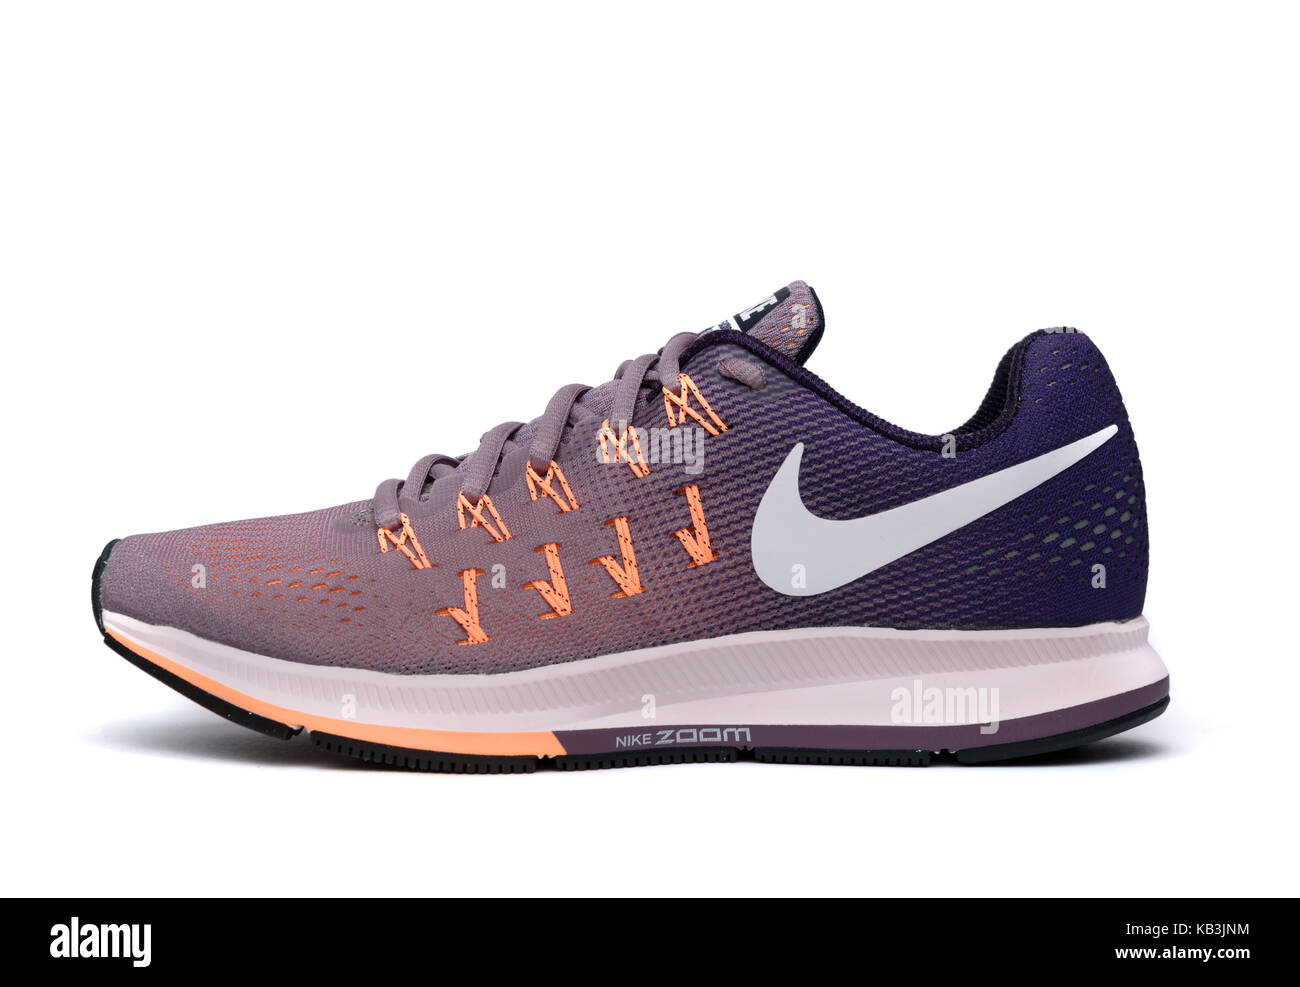 Viola e arancione Nike Pegasus 33 running shoe isolato su sfondo bianco Foto Stock